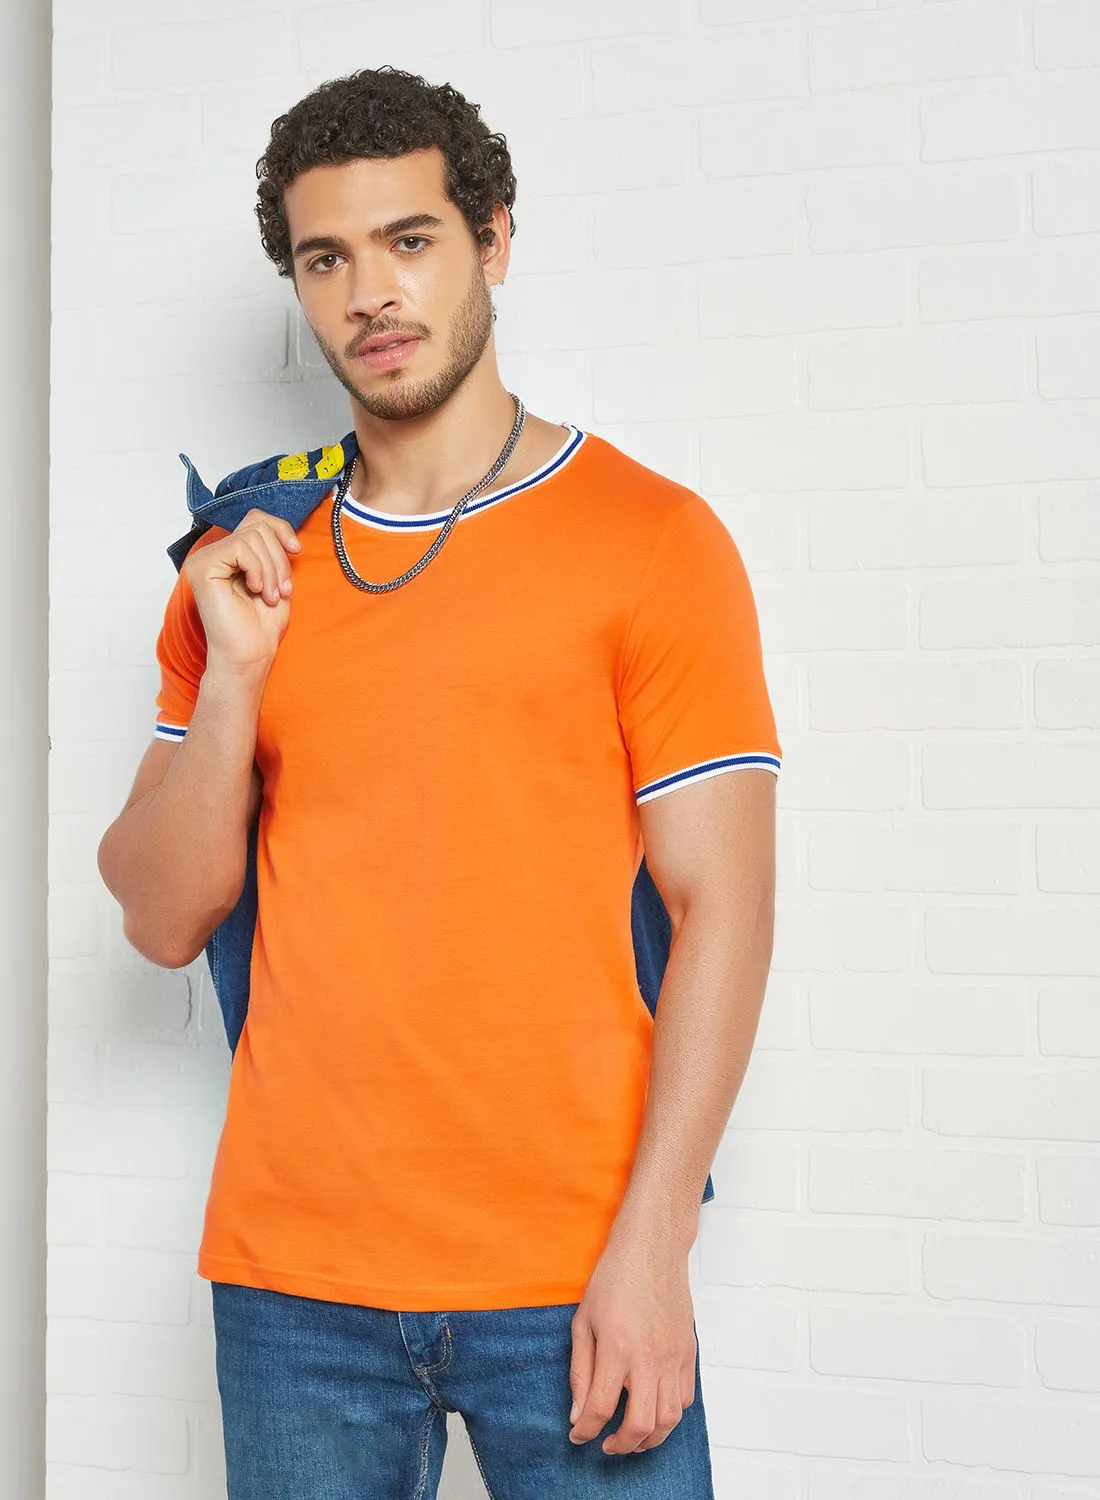 Blue Saint Contrast Tipping T-Shirt Orange